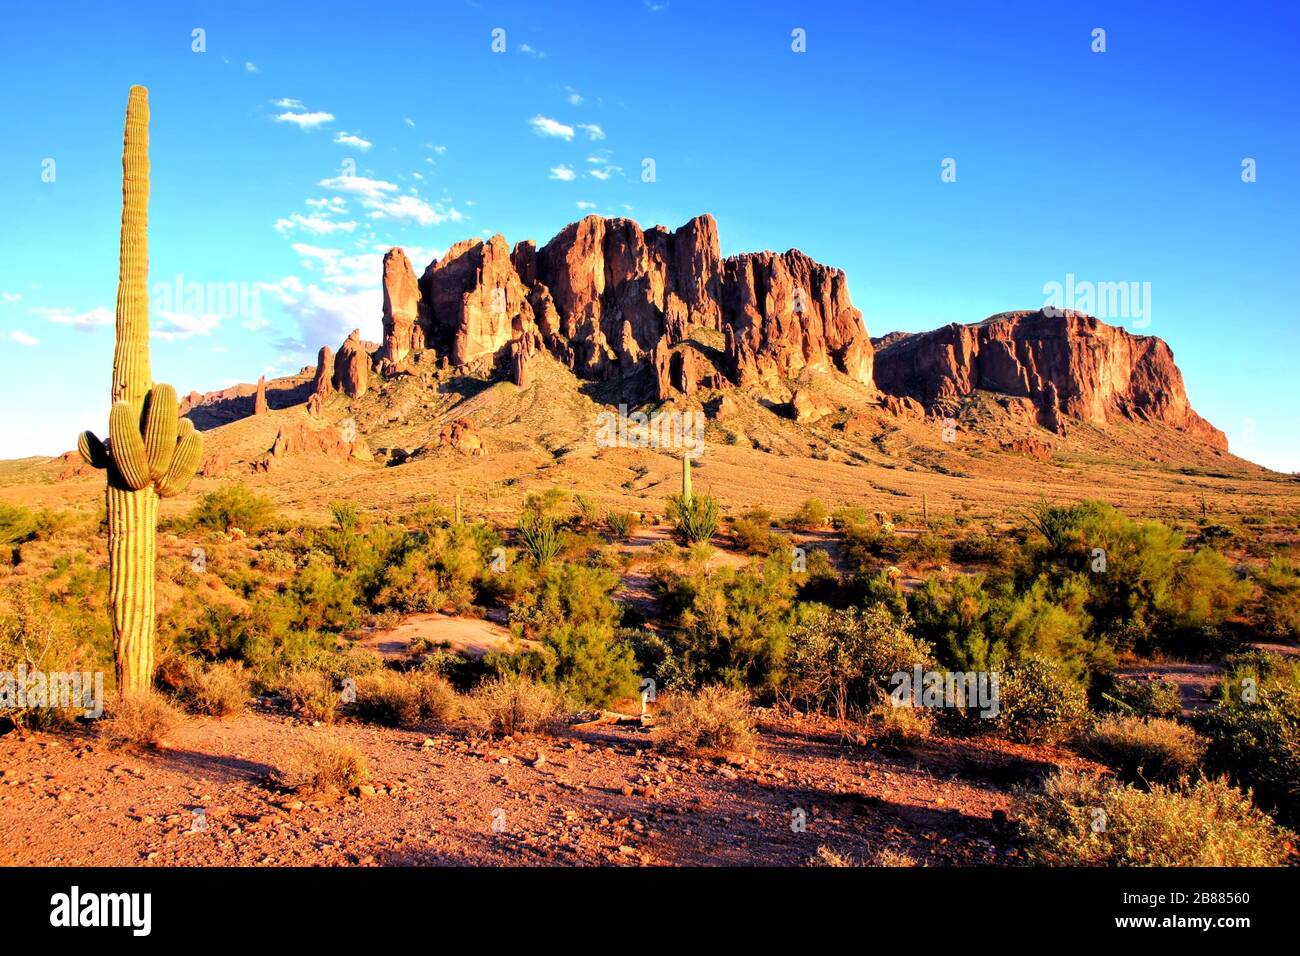 View of the Arizona desert with Saguaro cacti and mountains Stock Photo